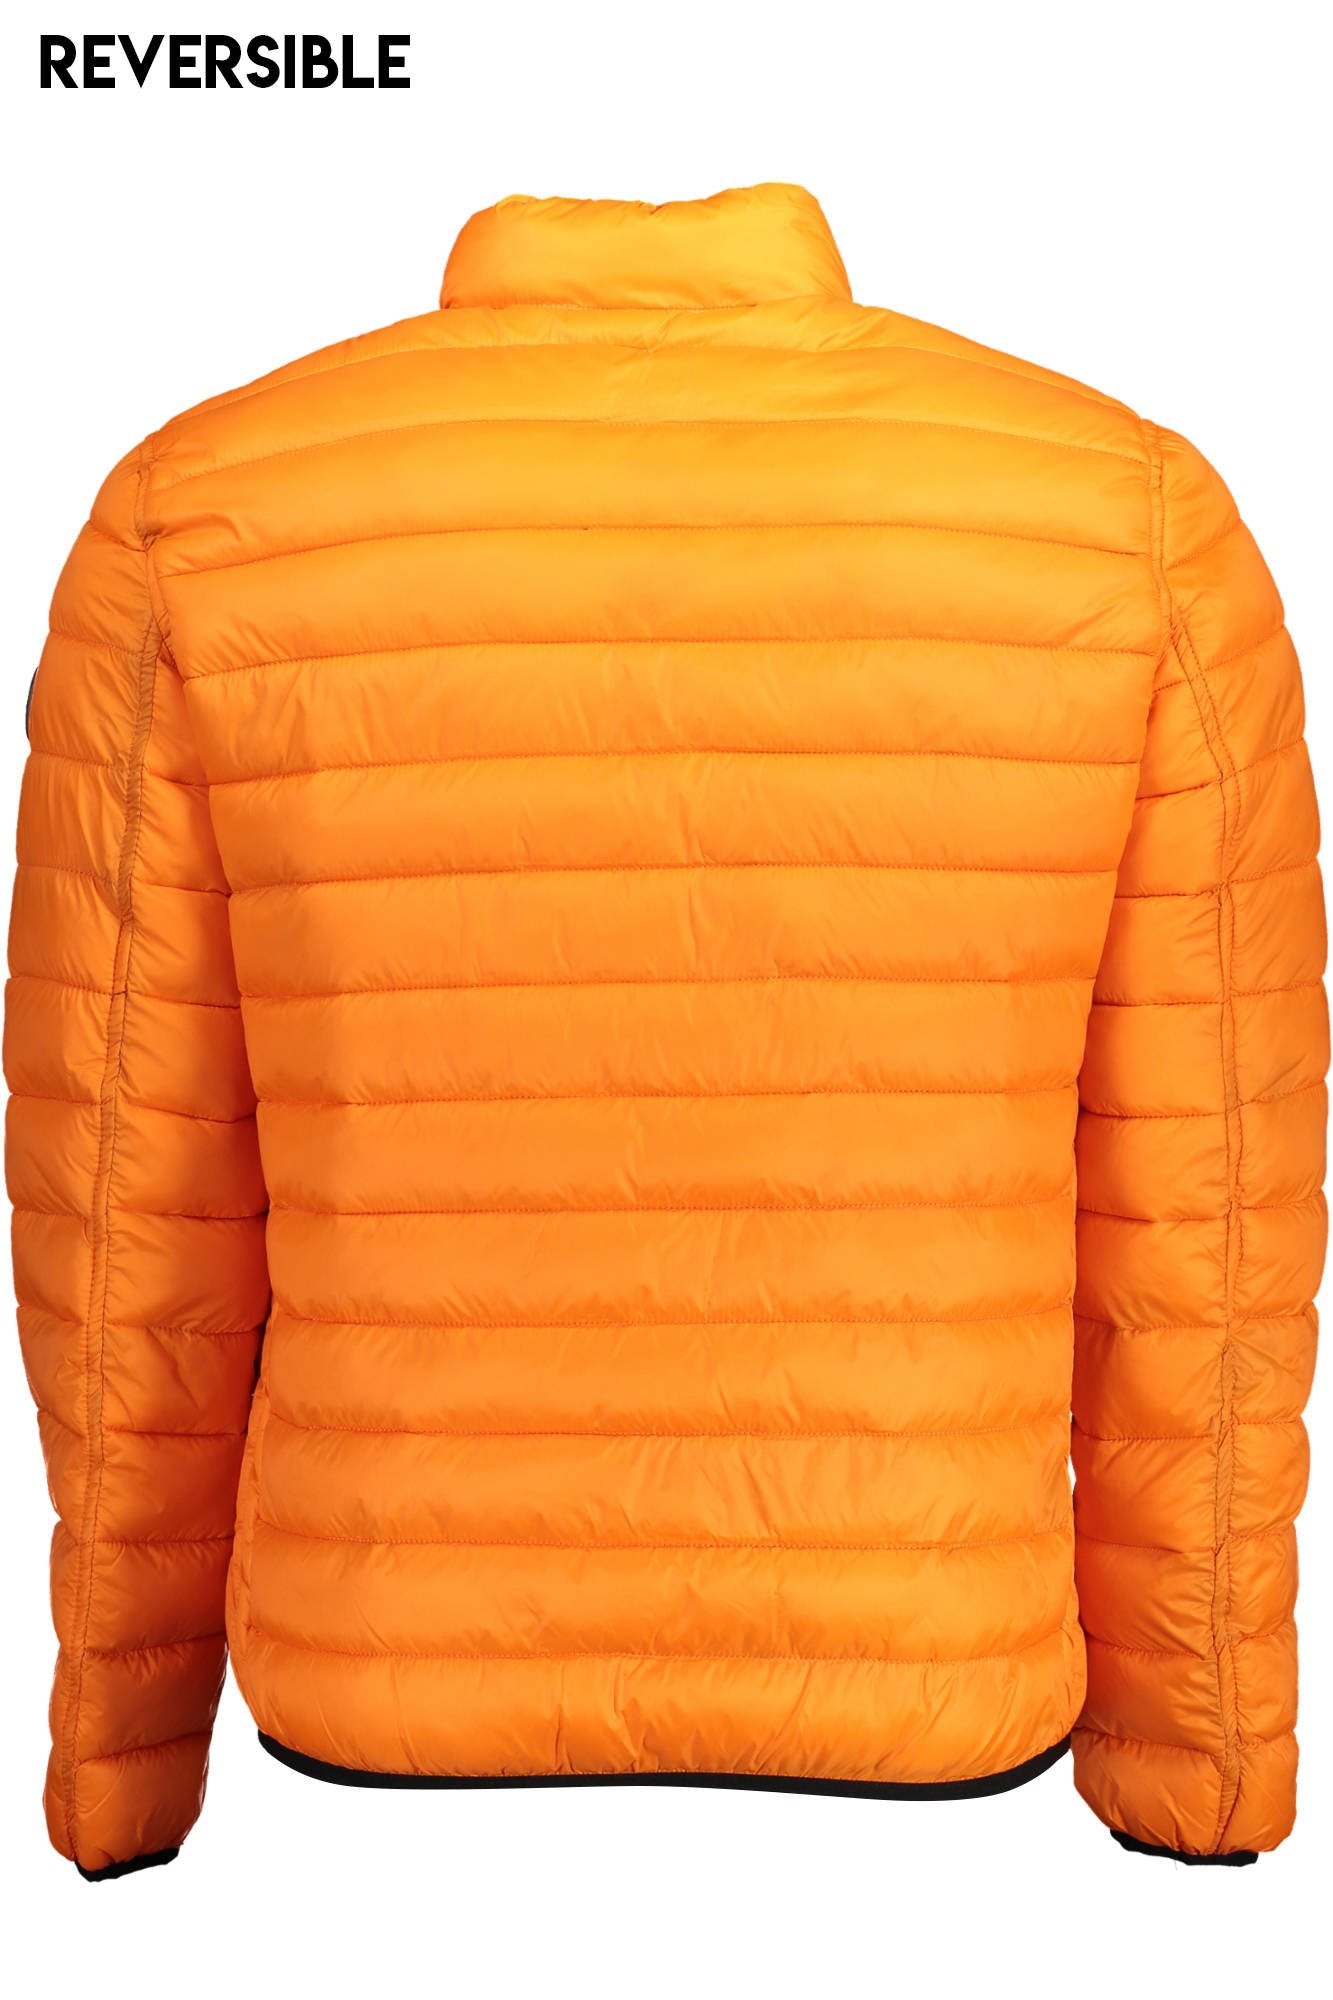 U.S. POLO ASSN. Orange Jacket - Fizigo